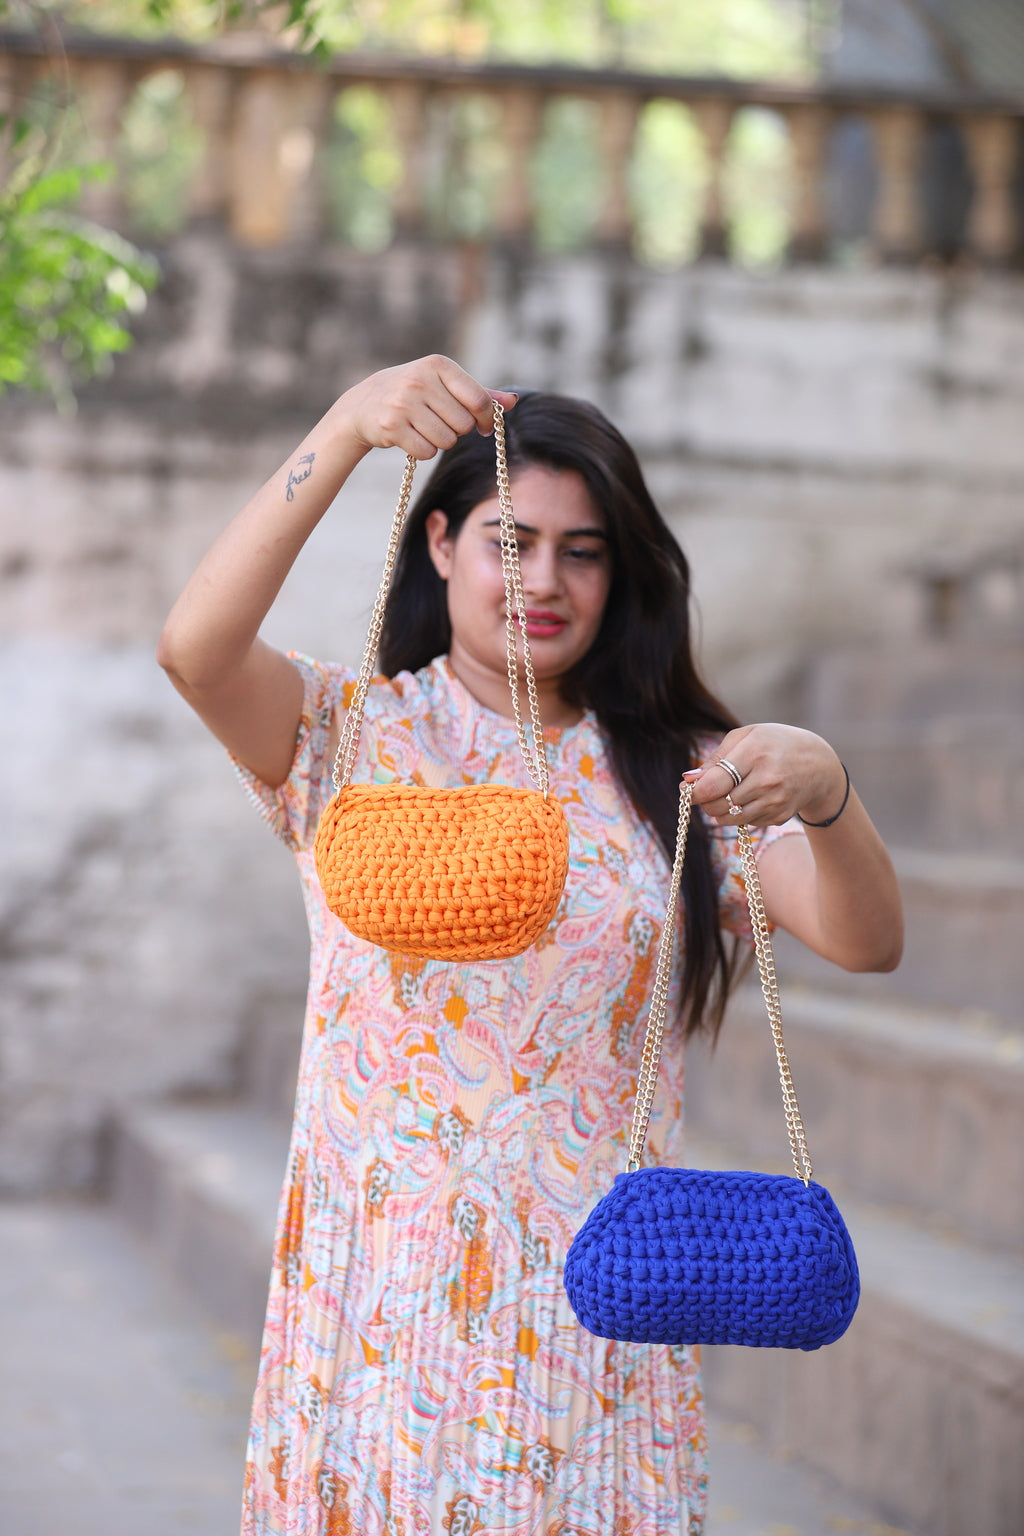 Handmade Royal Blue Crochet Bag